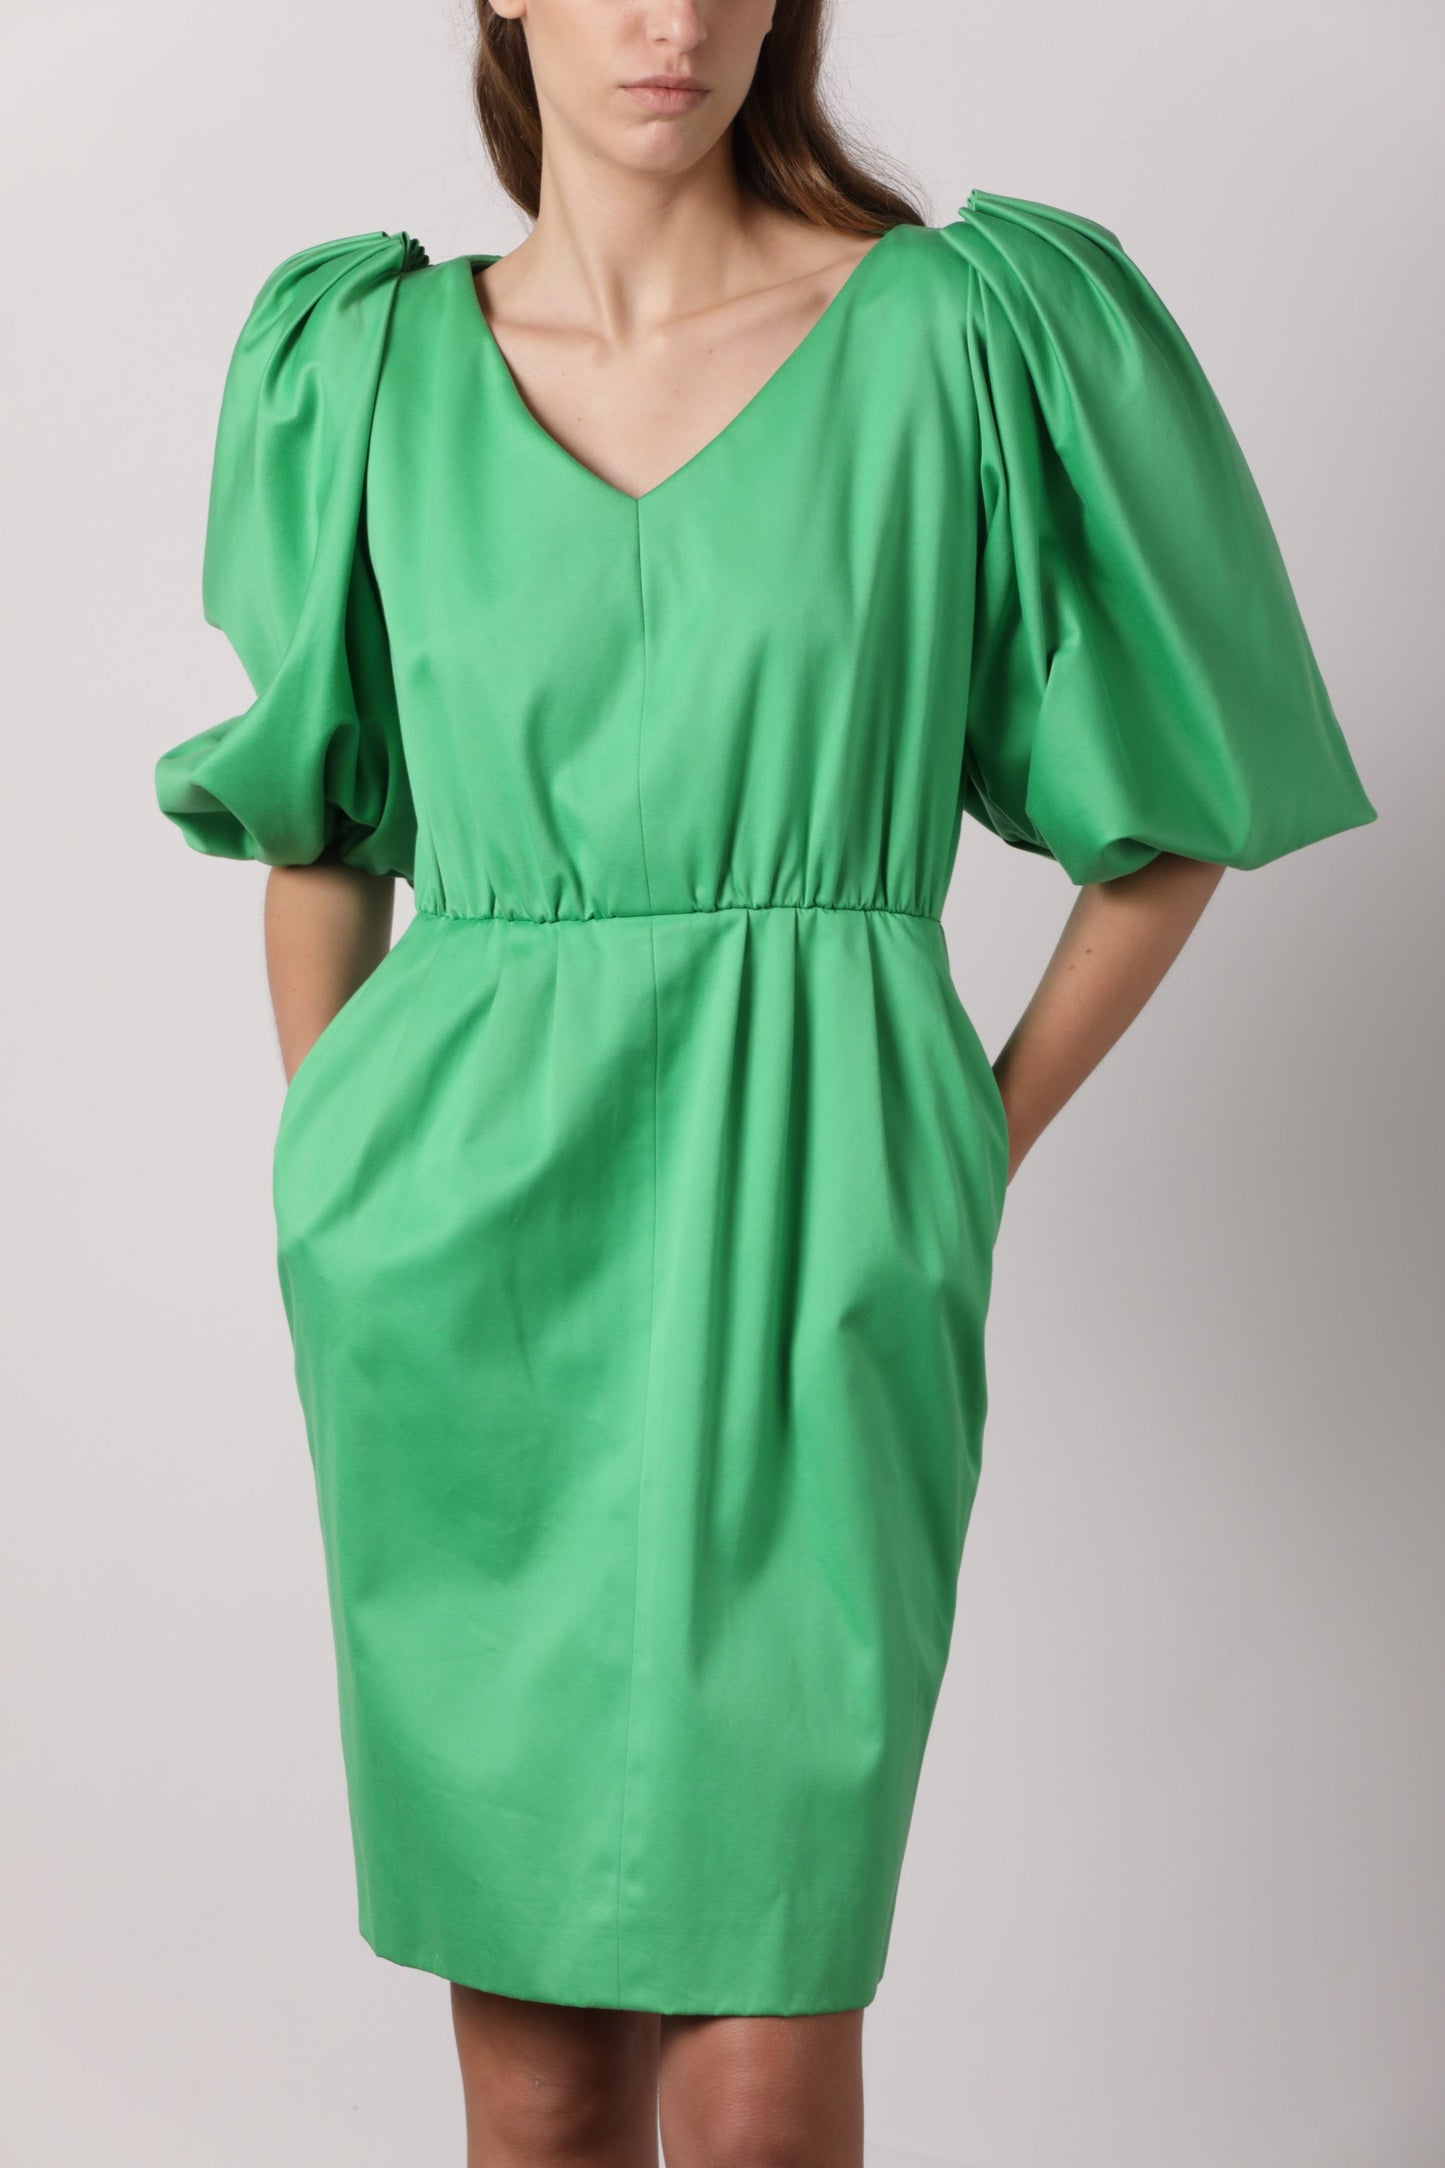 Yves Saint Laurent 80s emerald green dress